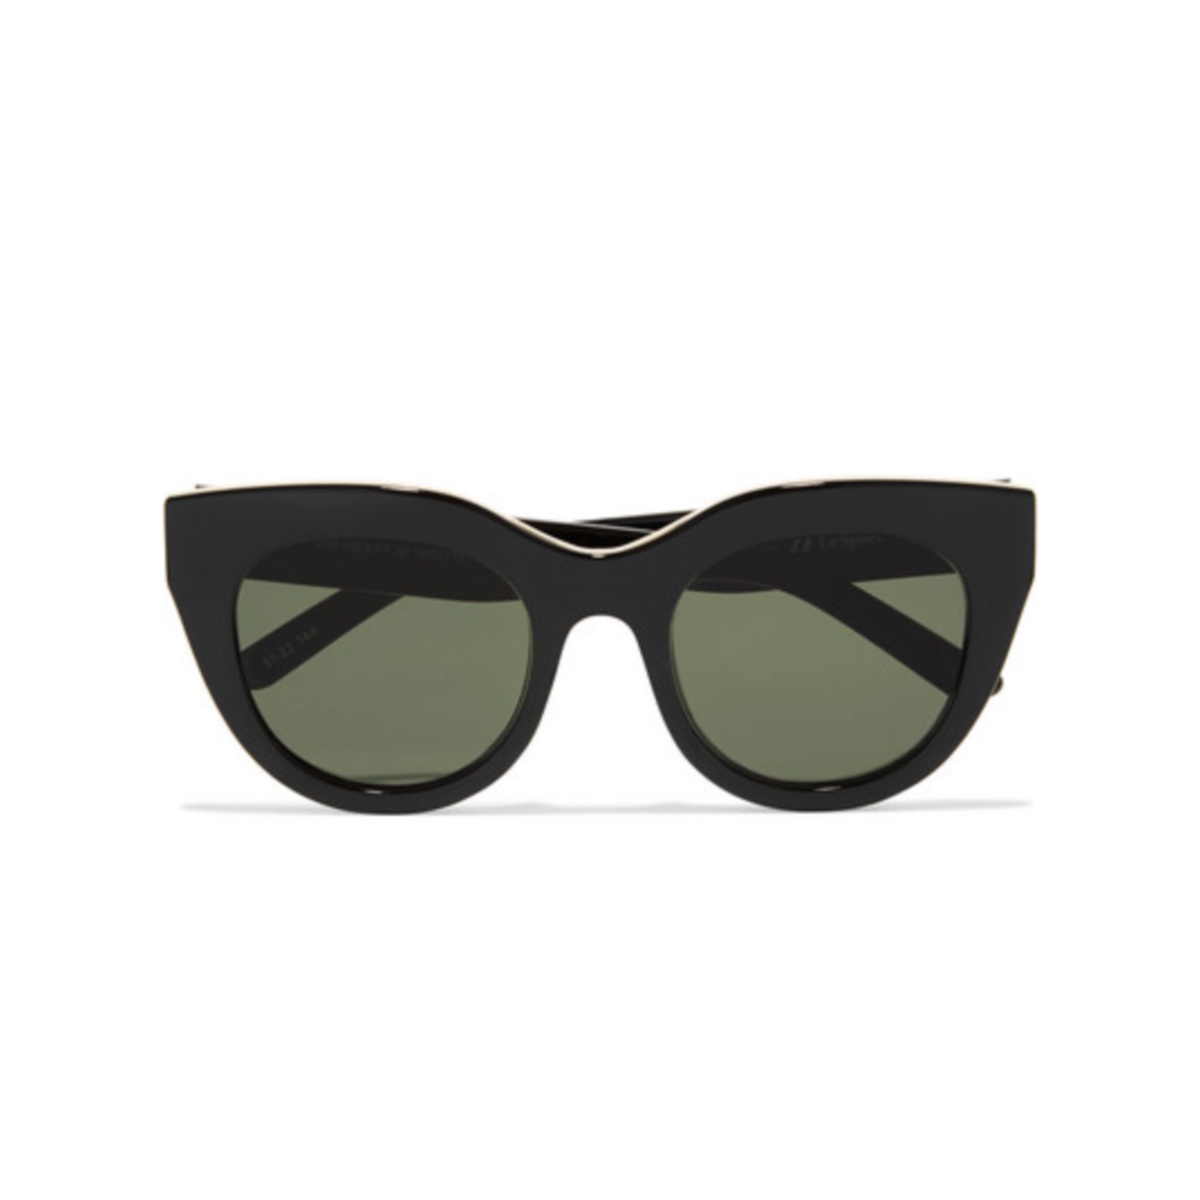 reebok classic sunglasses 2016